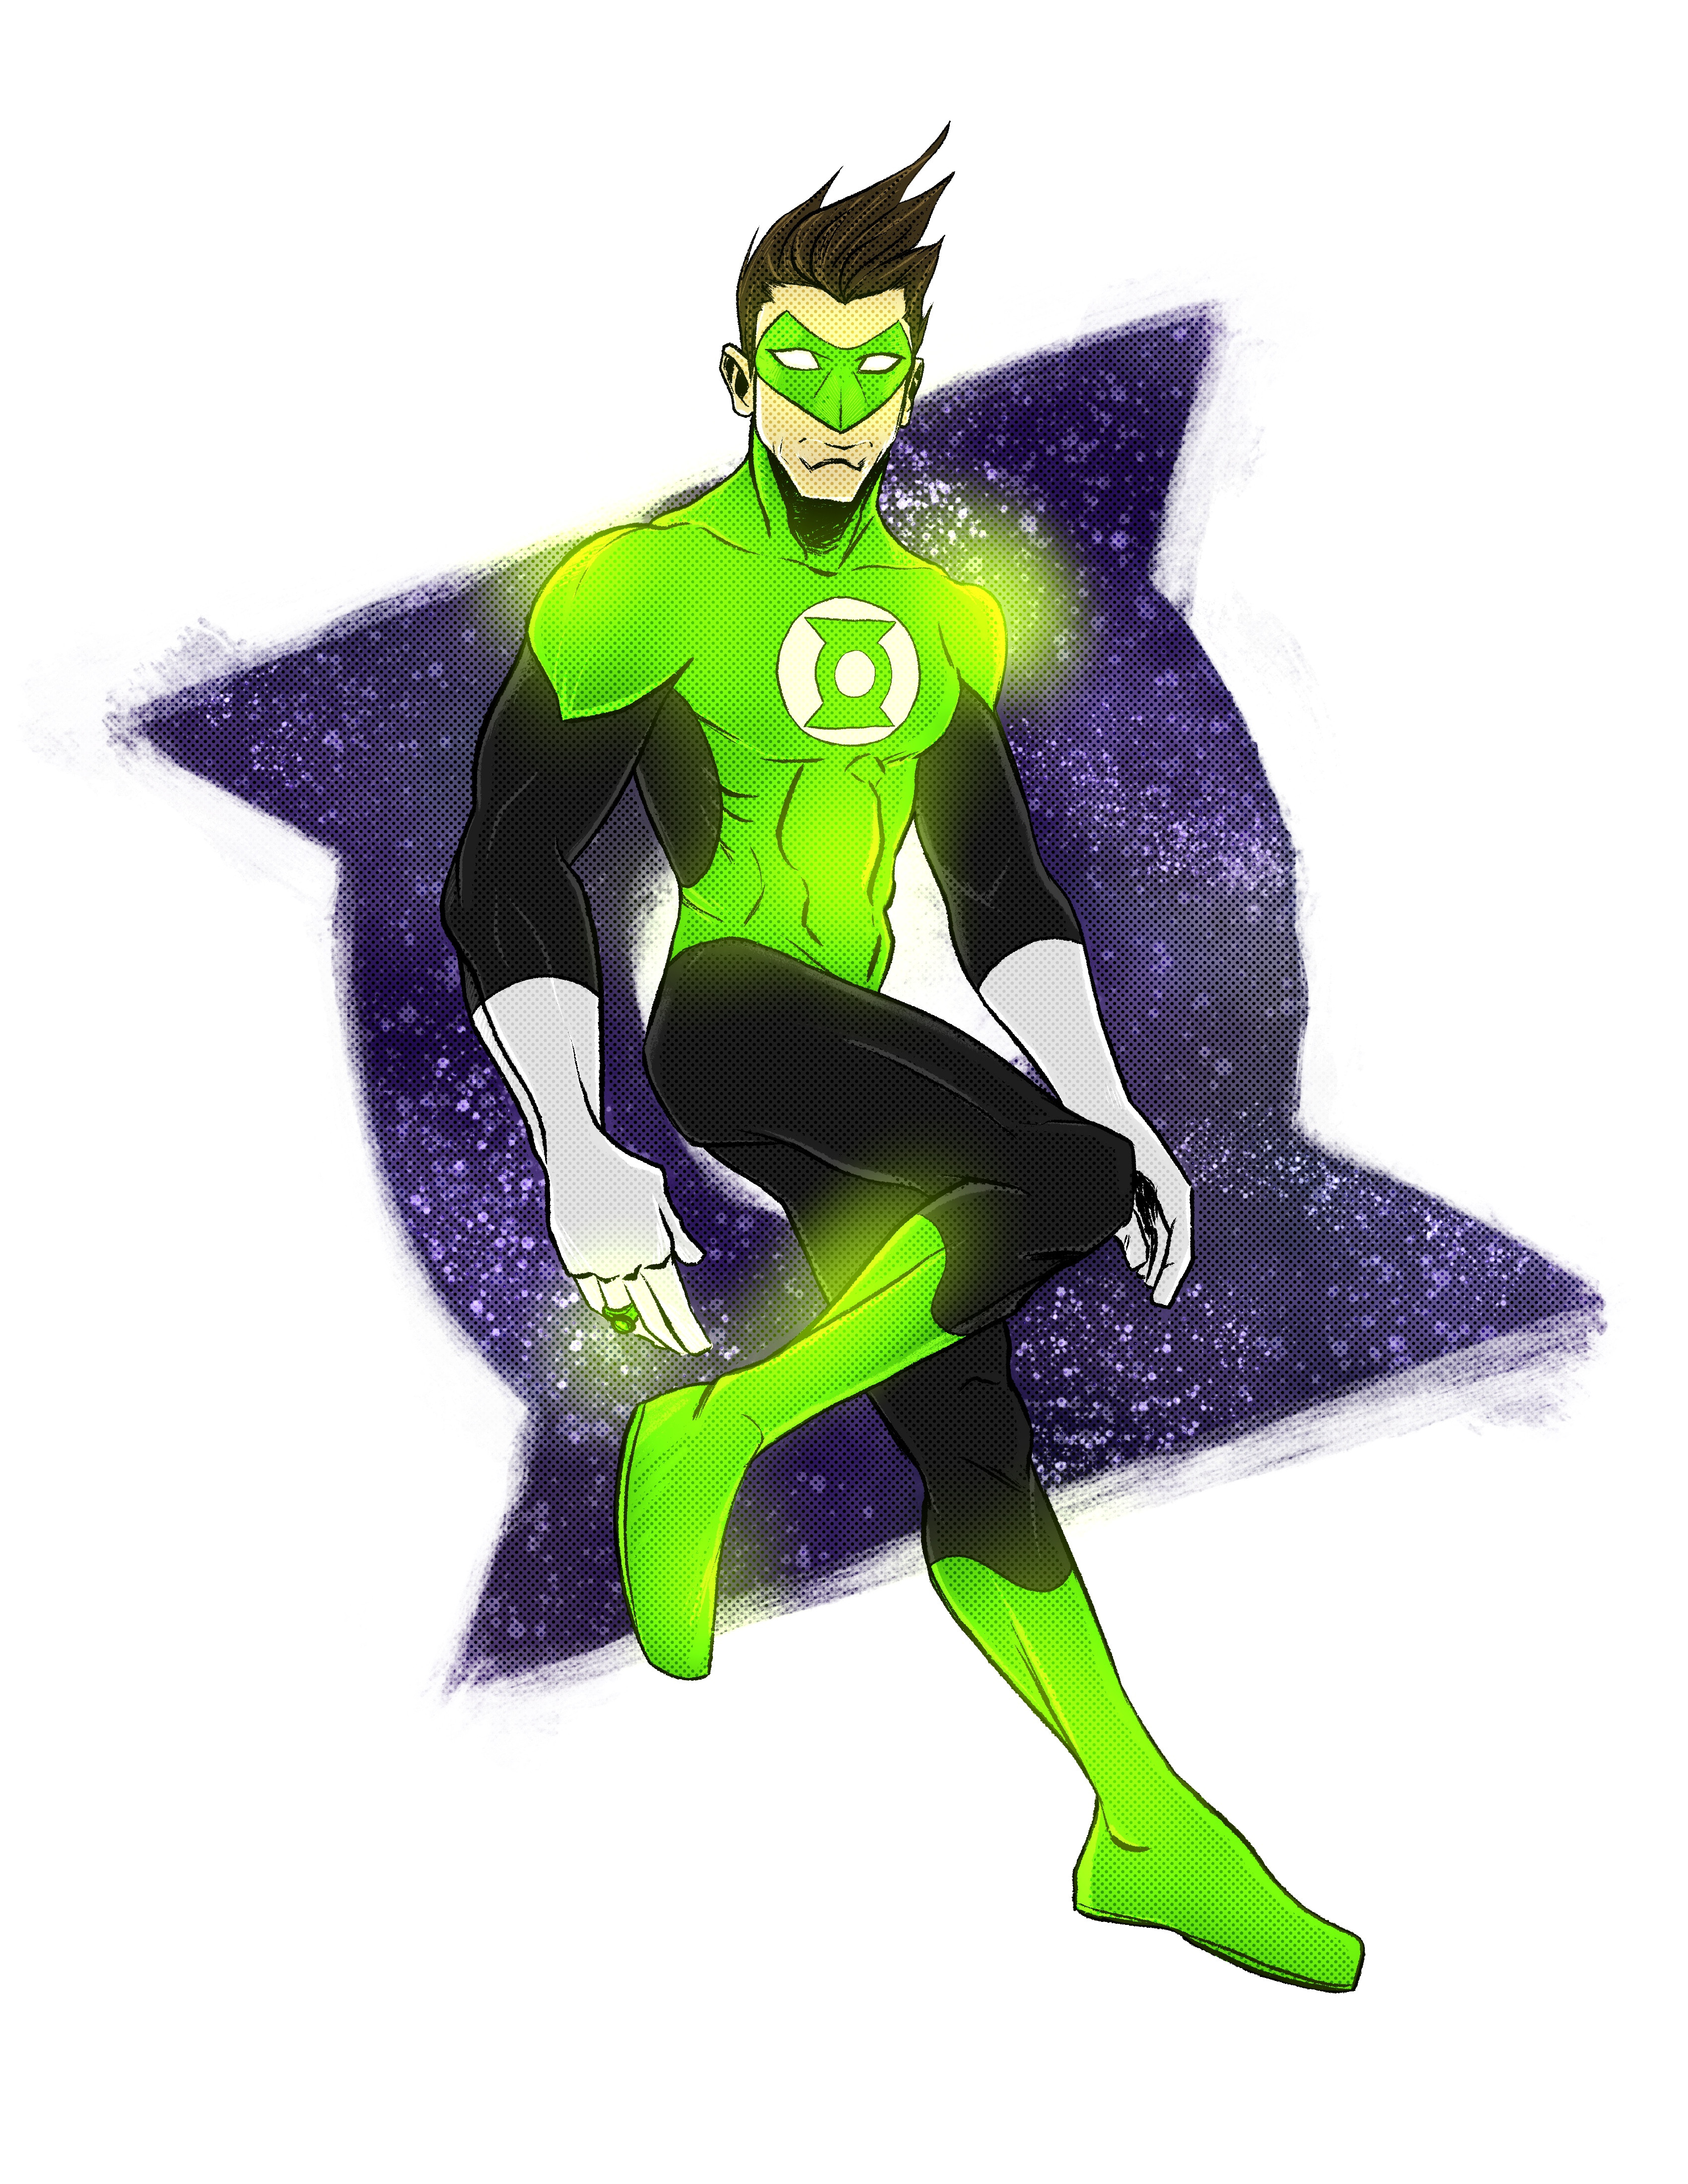 Green Lantern - Digital in Procreate